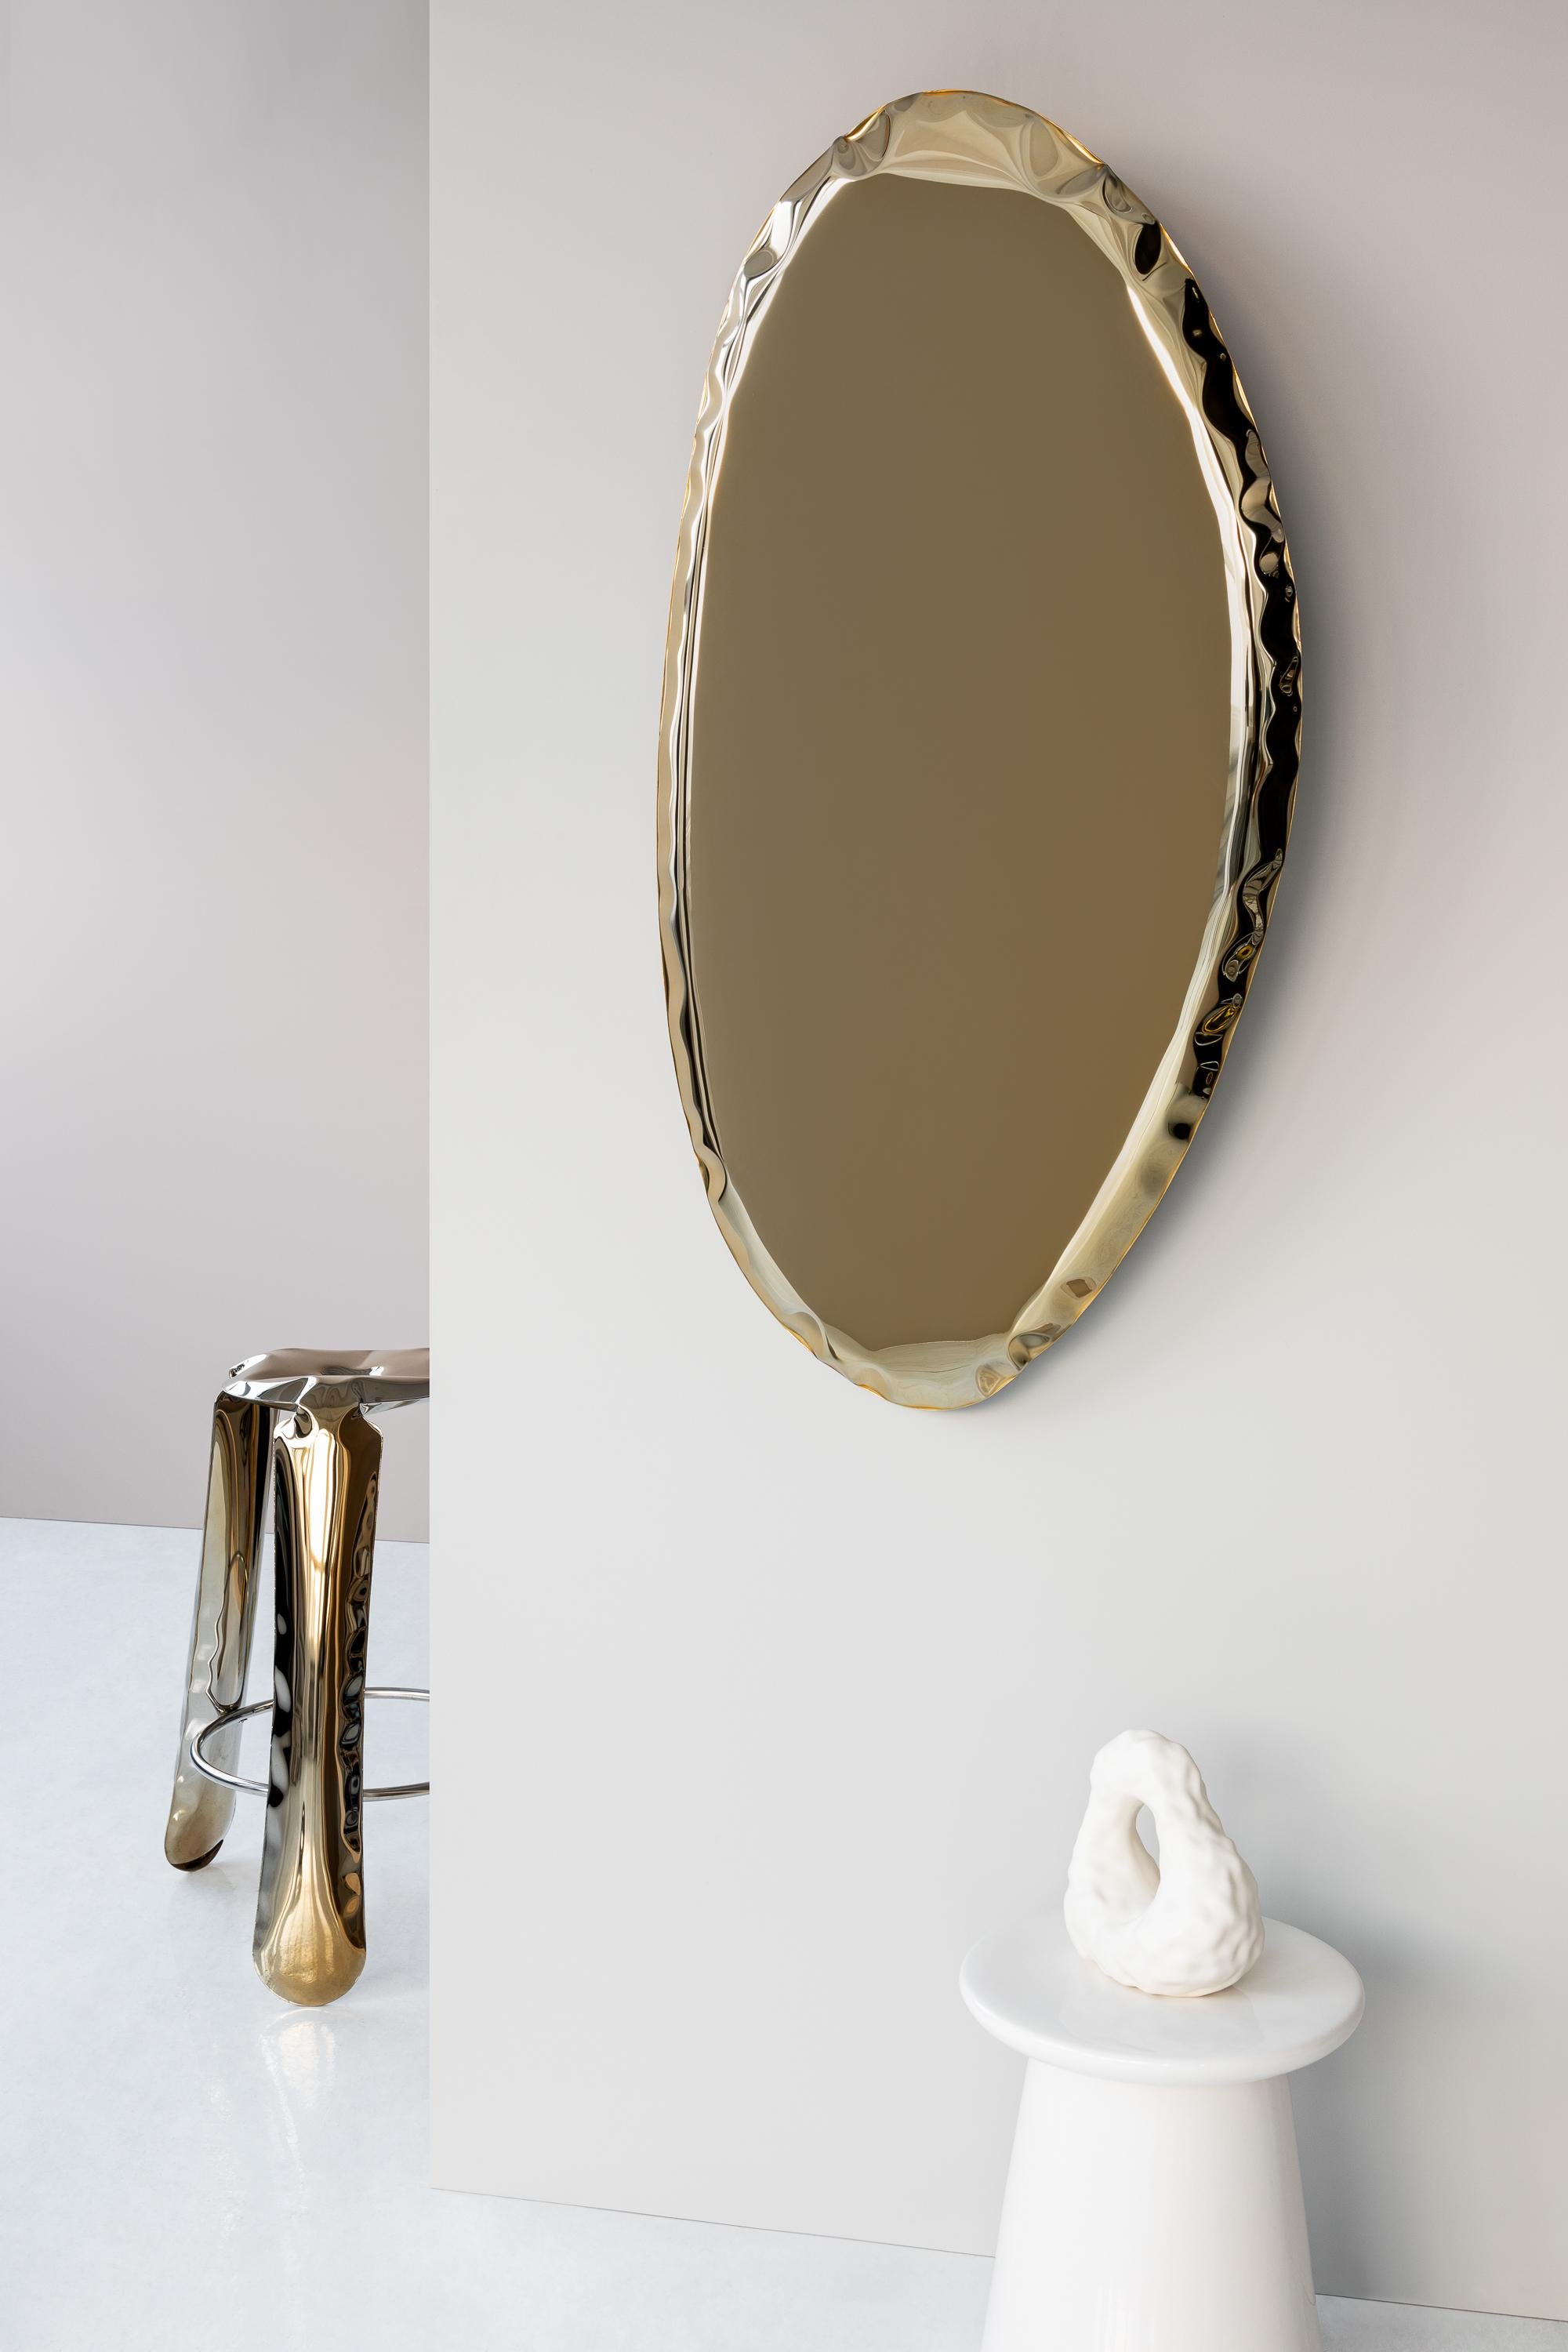 Polish Light Gold Tafla O4 Wall Mirror by Zieta For Sale